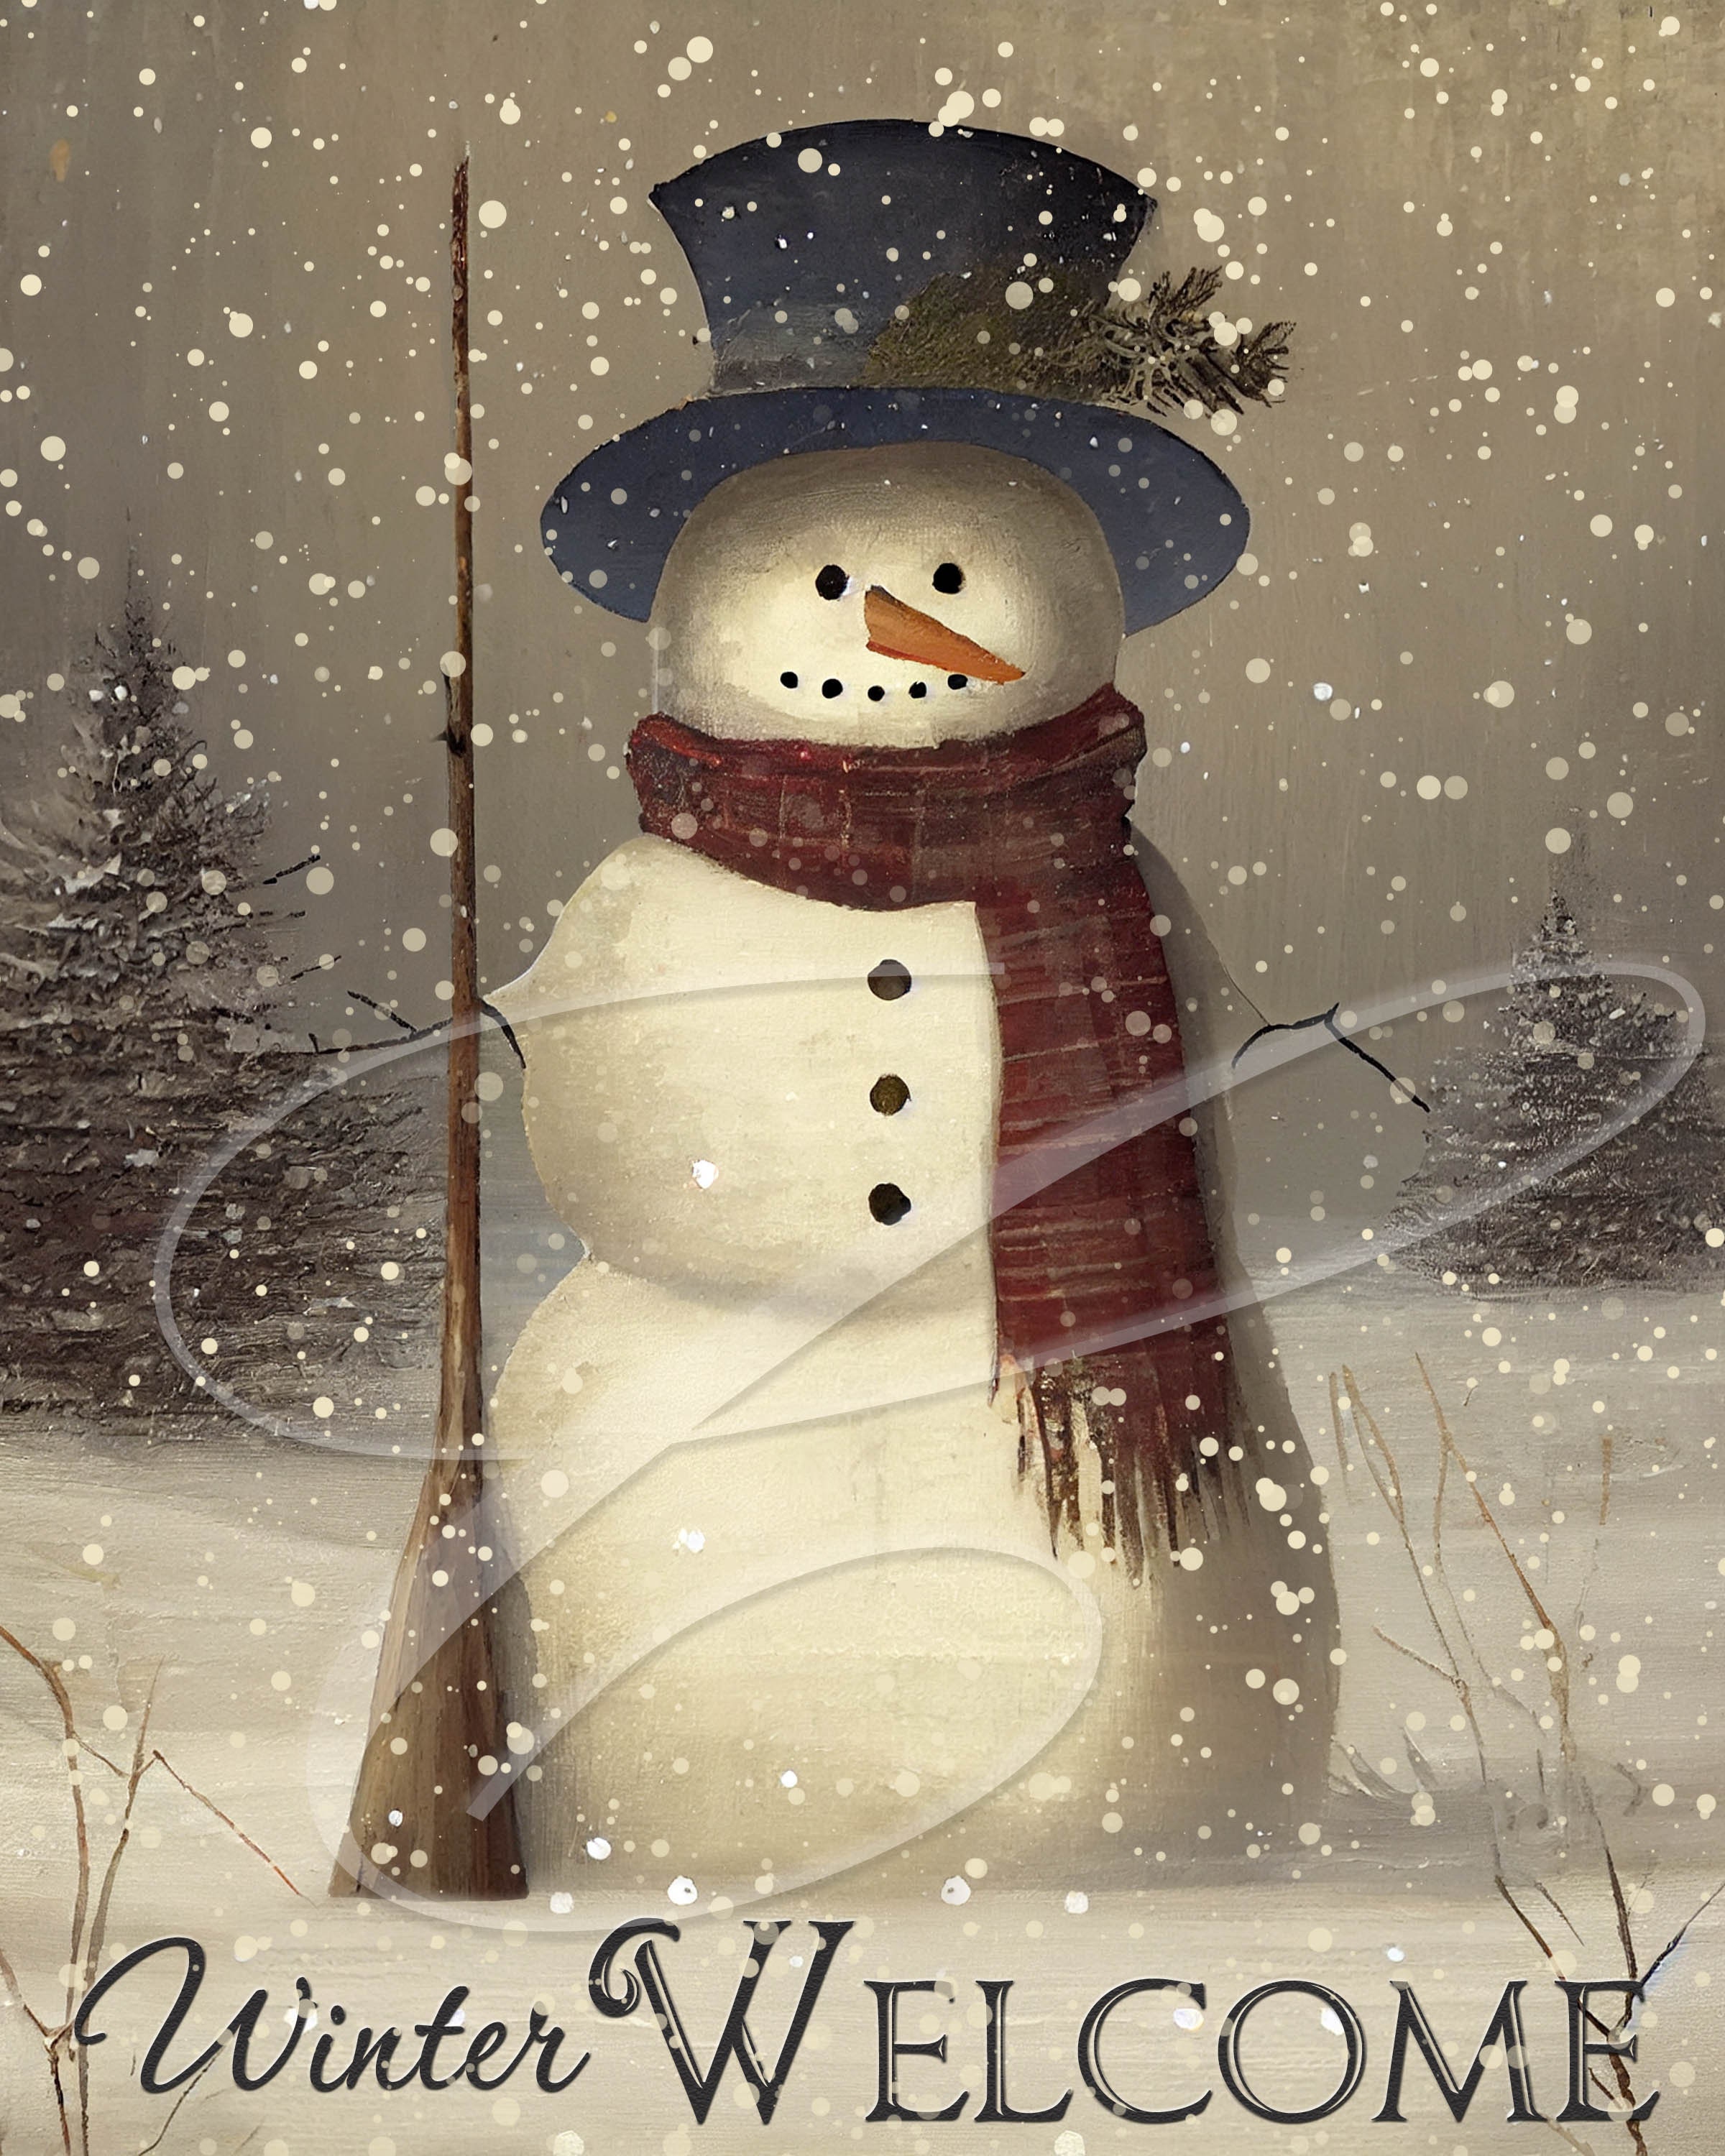 Design Works Snowman with Broom Snow Holiday Christmas Felt